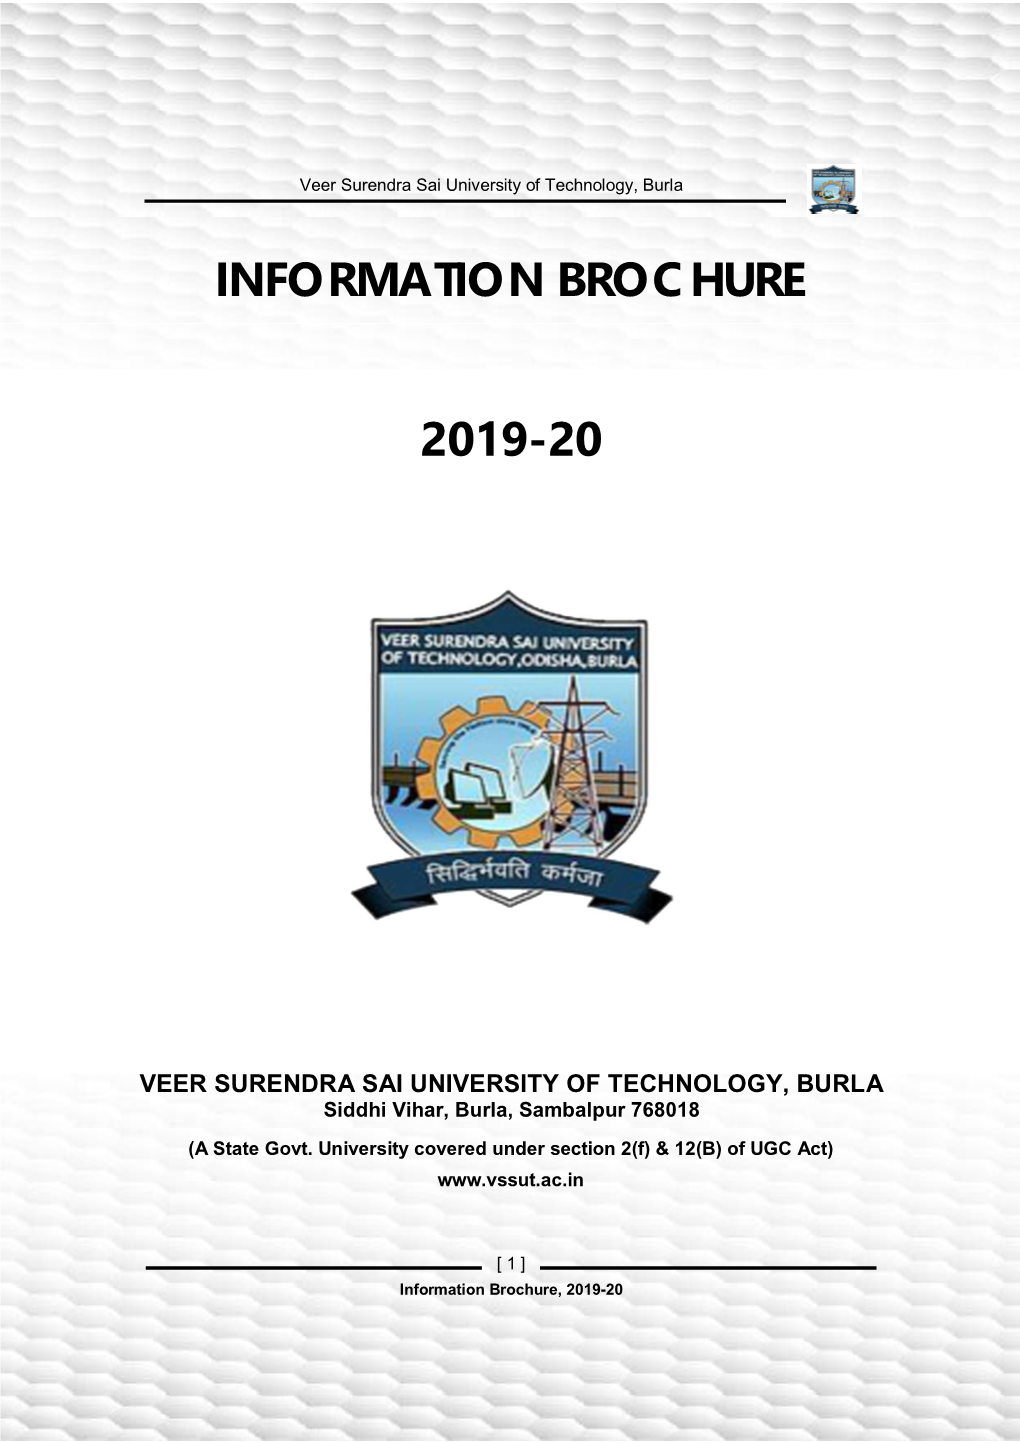 Information Brochure 2019-20